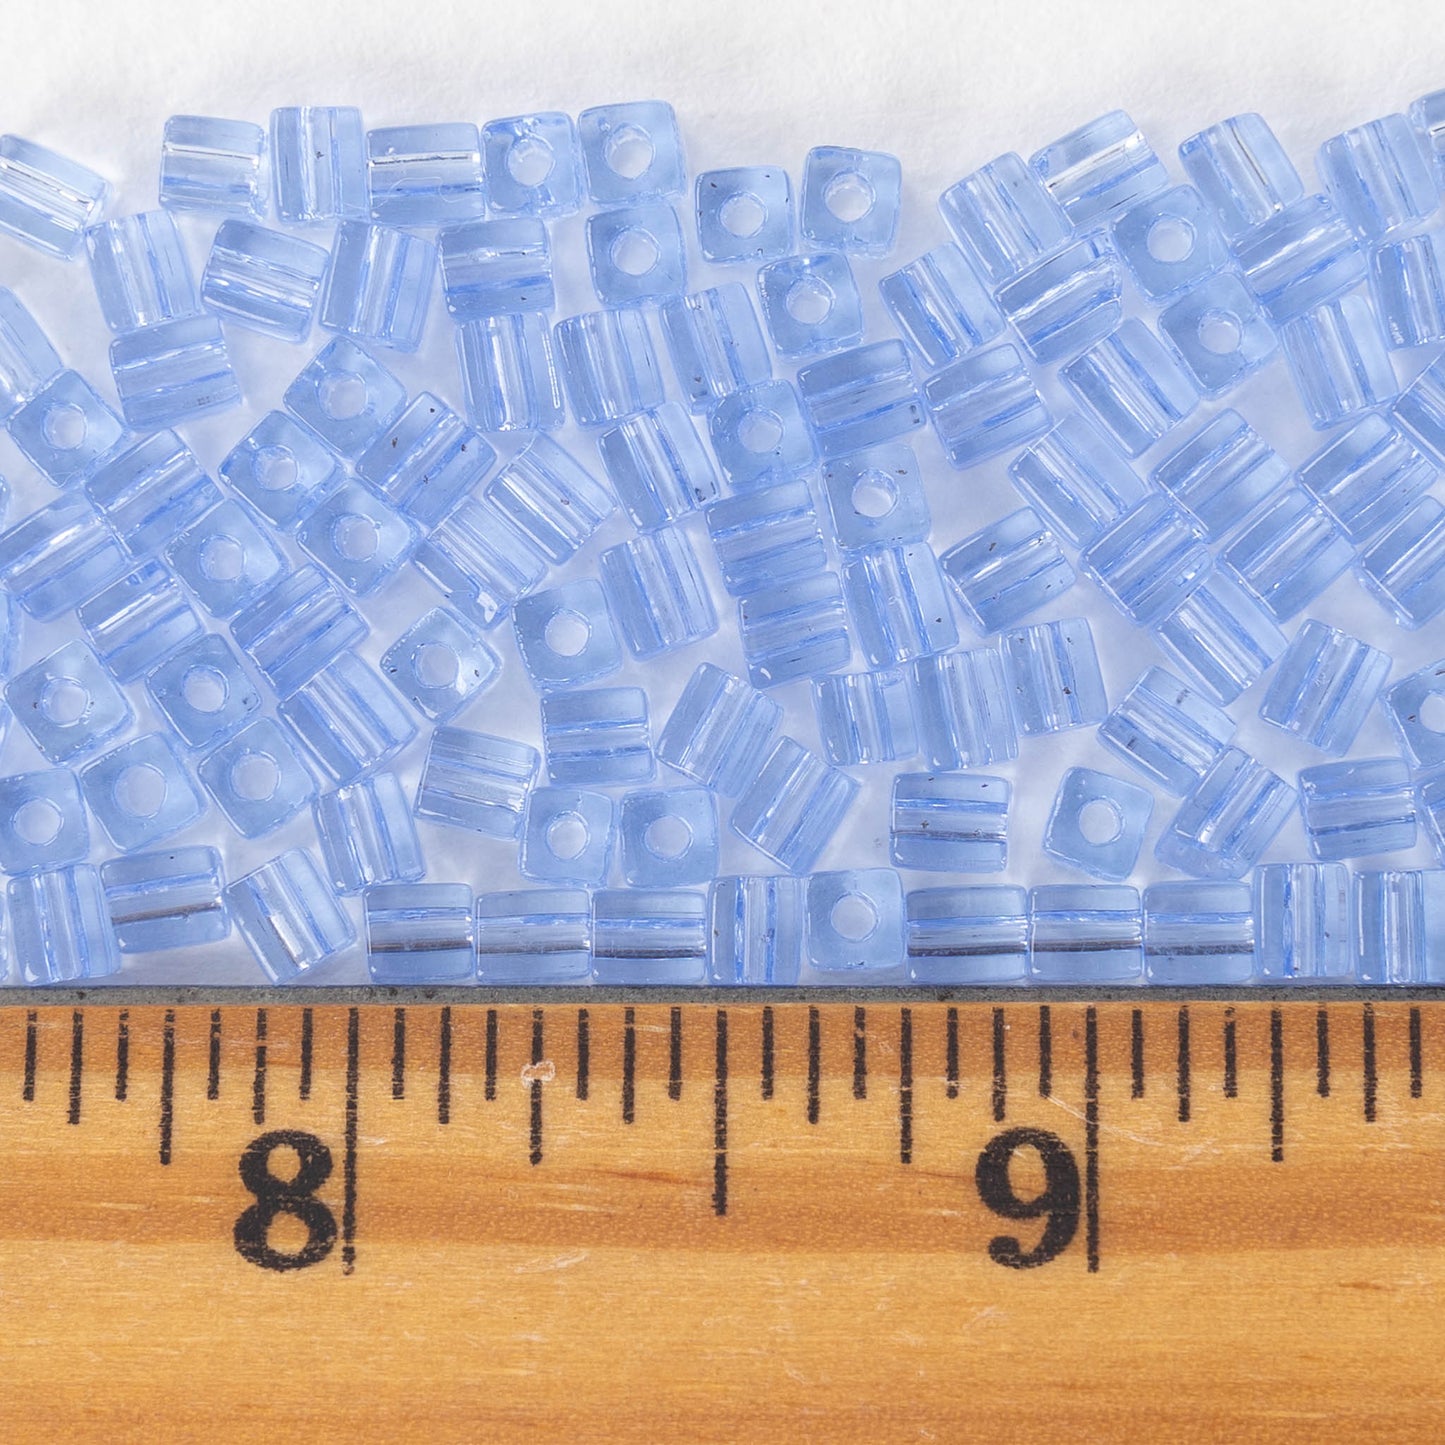 4mm Miyuki Cube Beads - Cornflower Blue - 20 or 60 grams